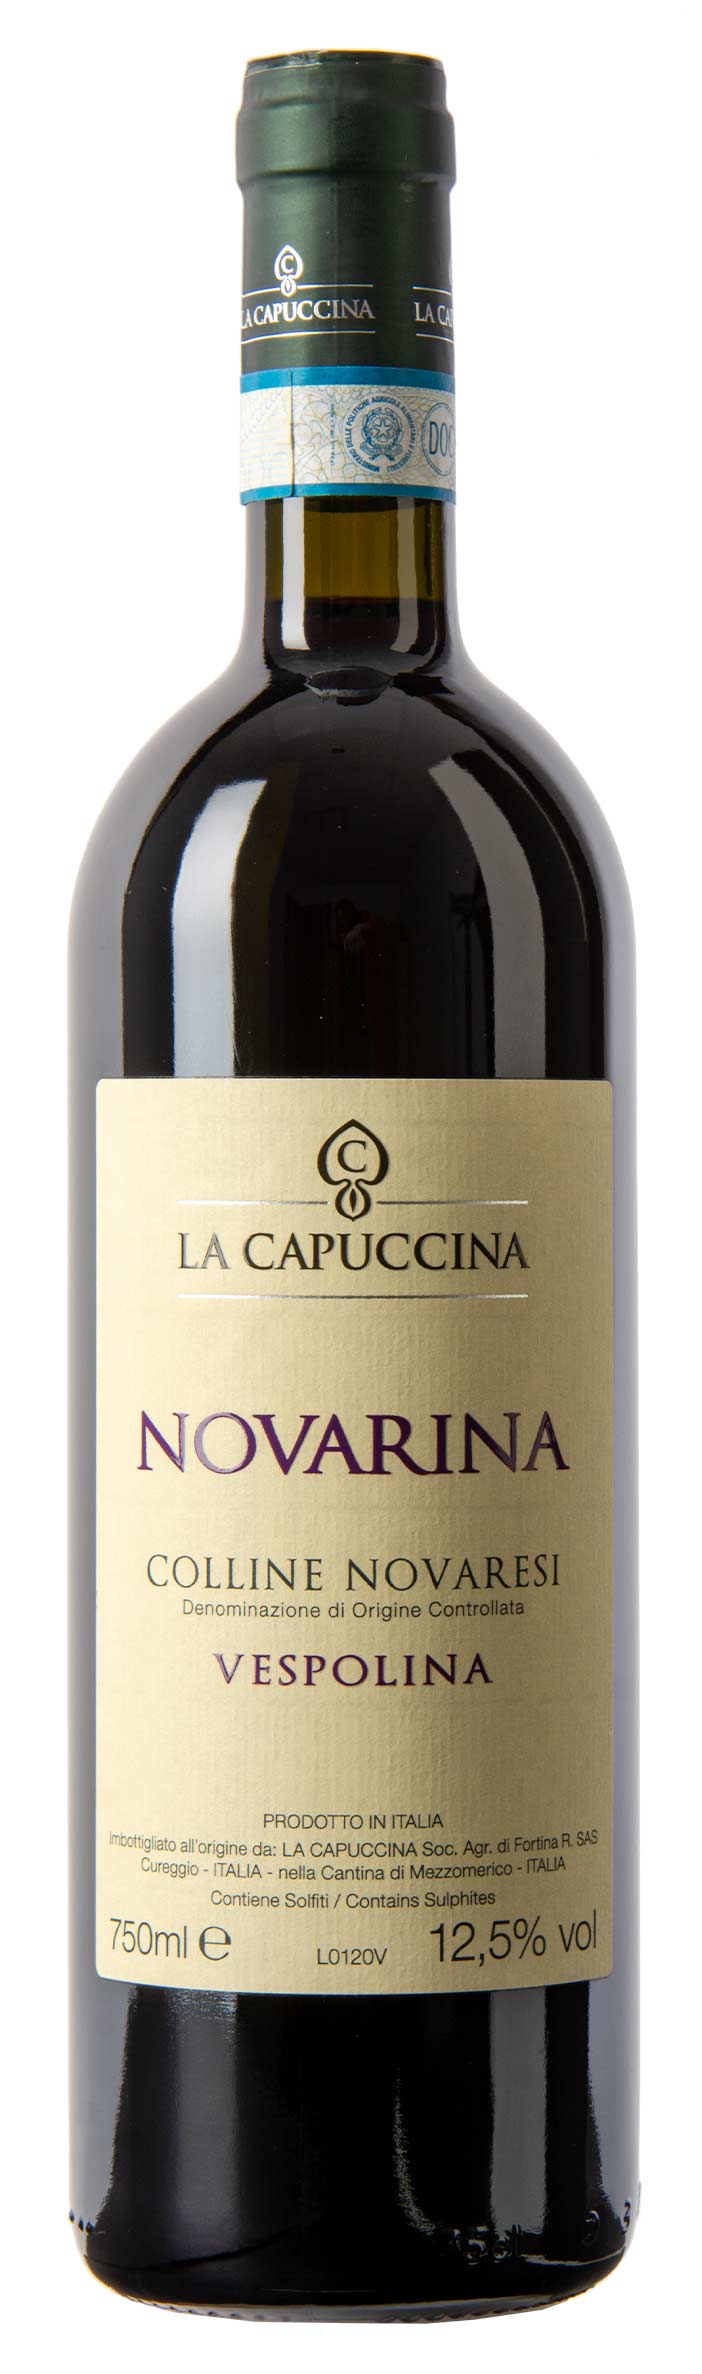 La Capuccina Vespolina Novarina